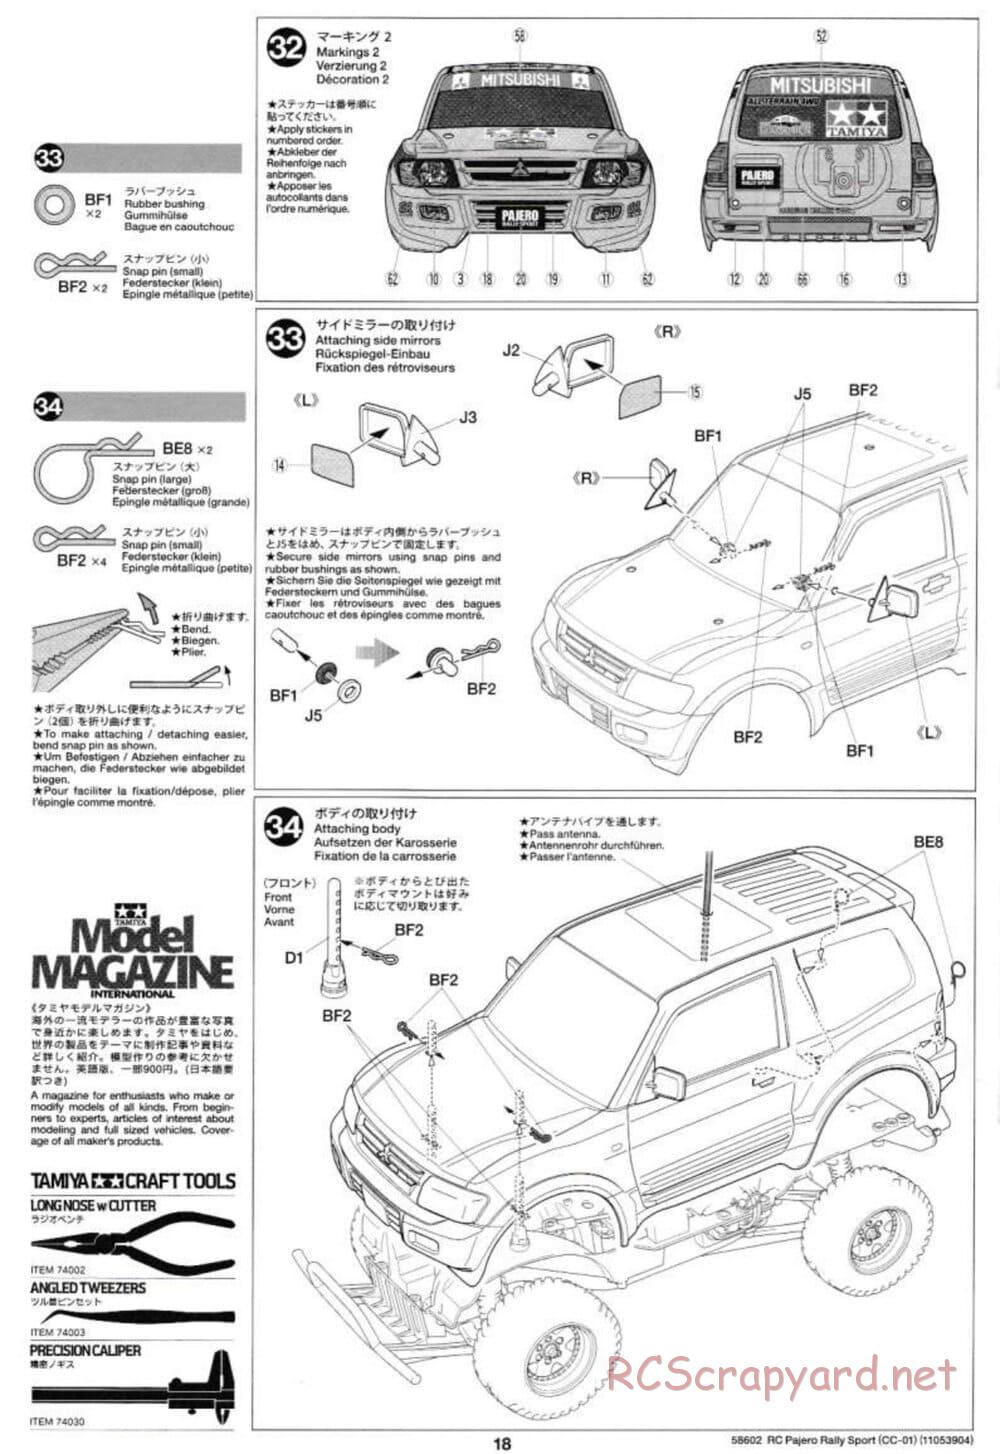 Tamiya - Mitsubishi Pajero Rally Sport - CC-01 Chassis - Manual - Page 18